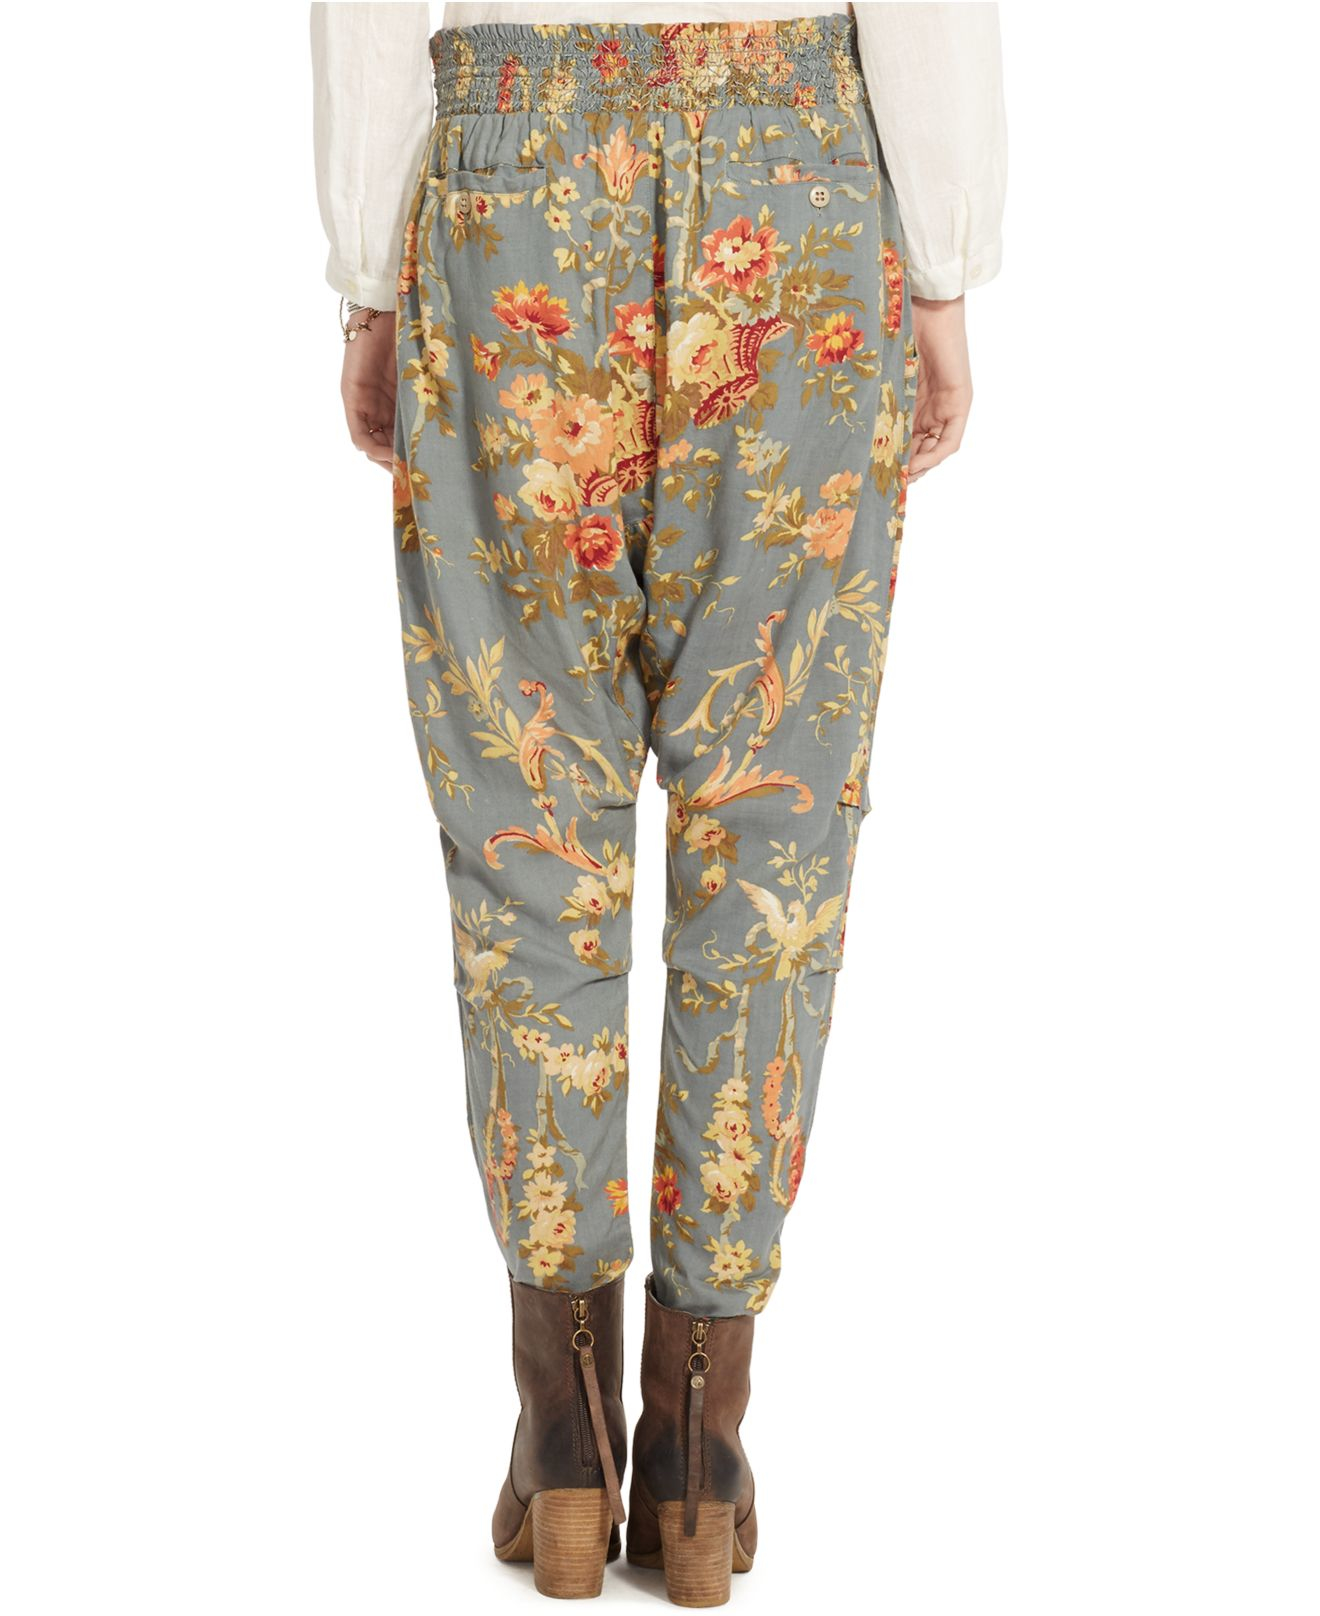 Lyst - Denim & Supply Ralph Lauren Floral-print Harem Pants in Gray